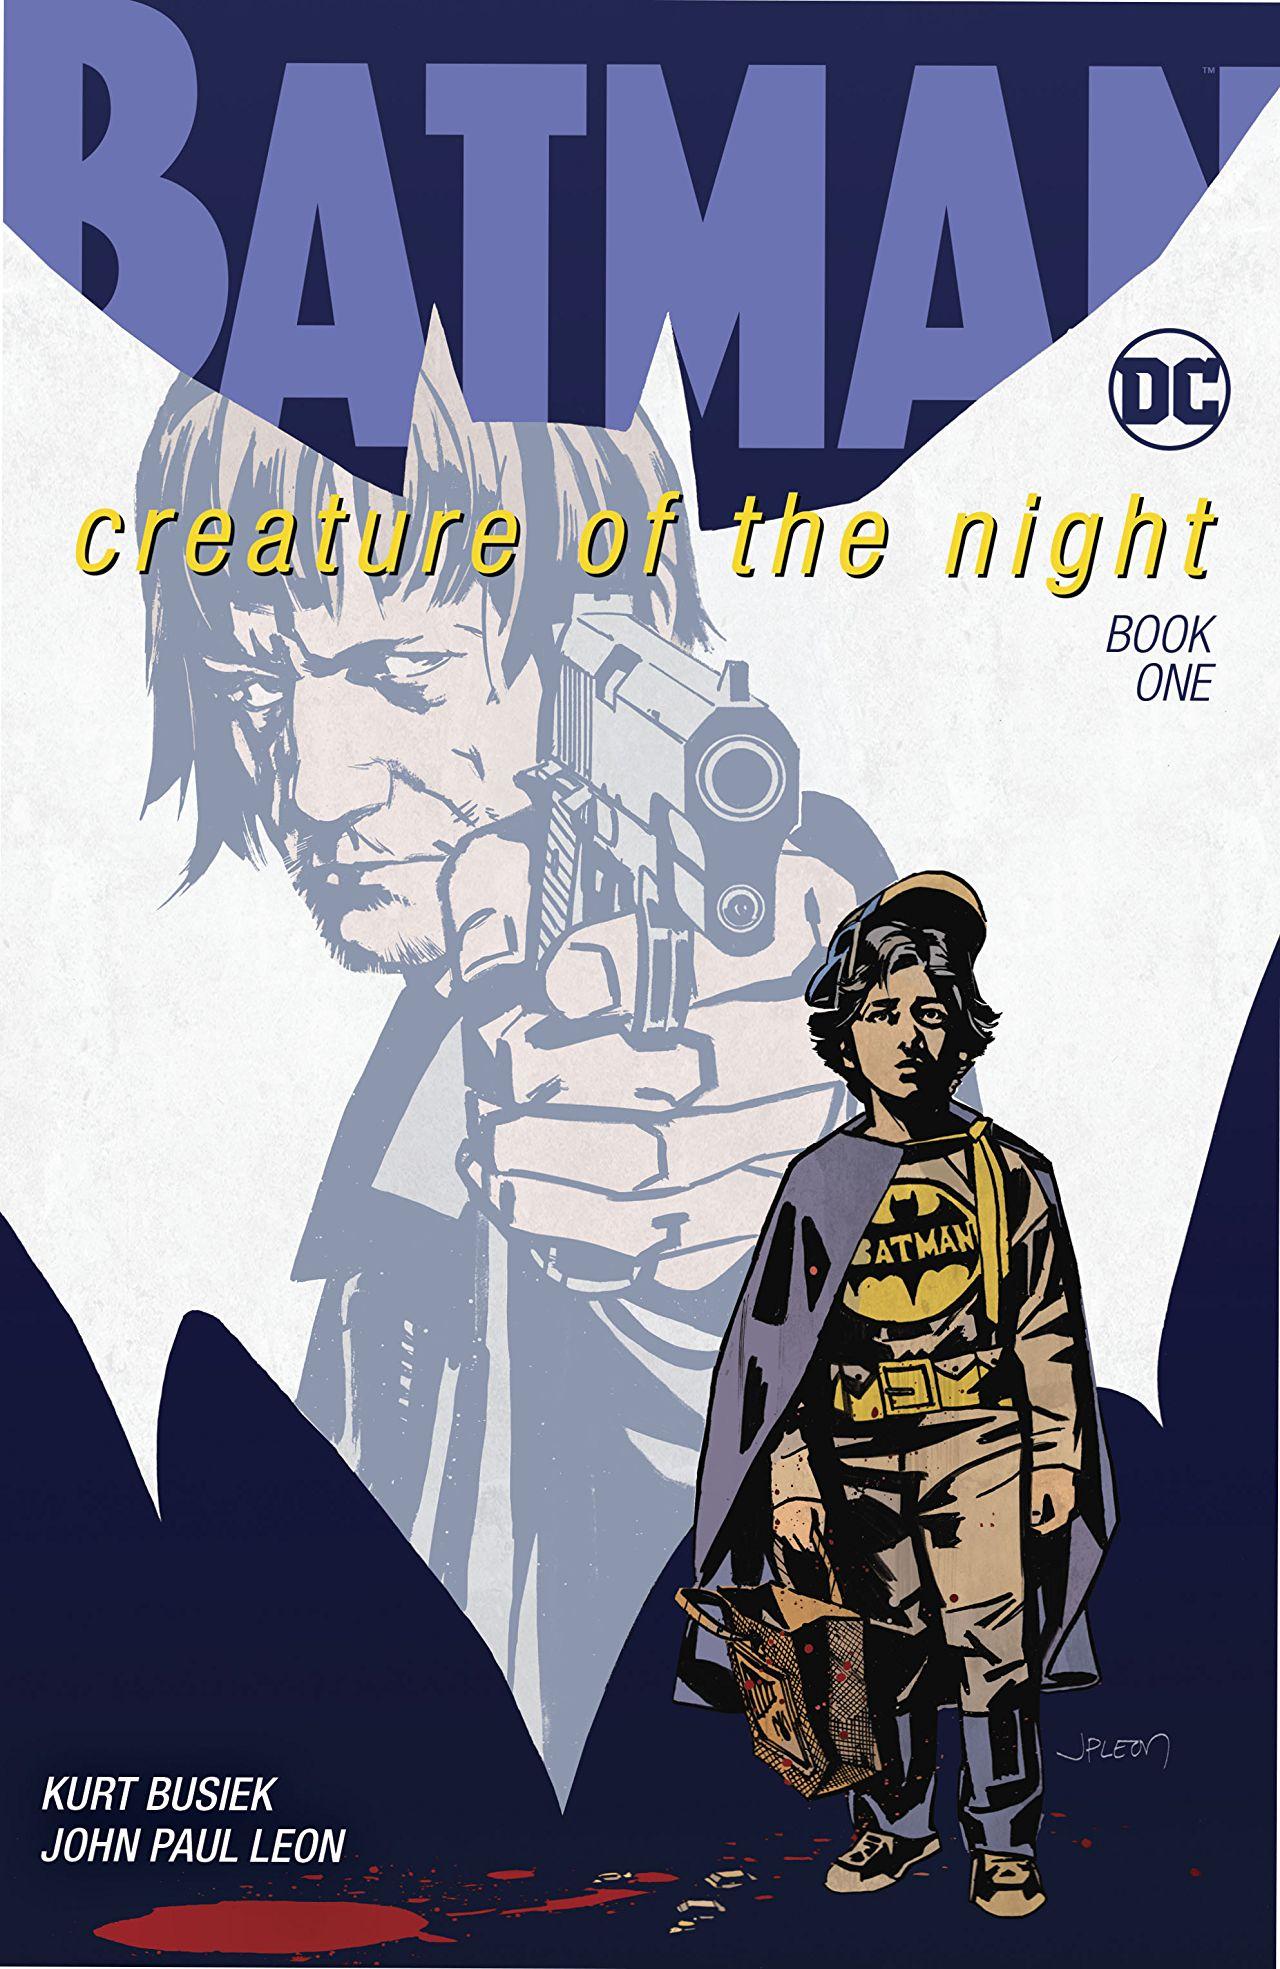 Batman: Creature of the Night Vol. 1 #1